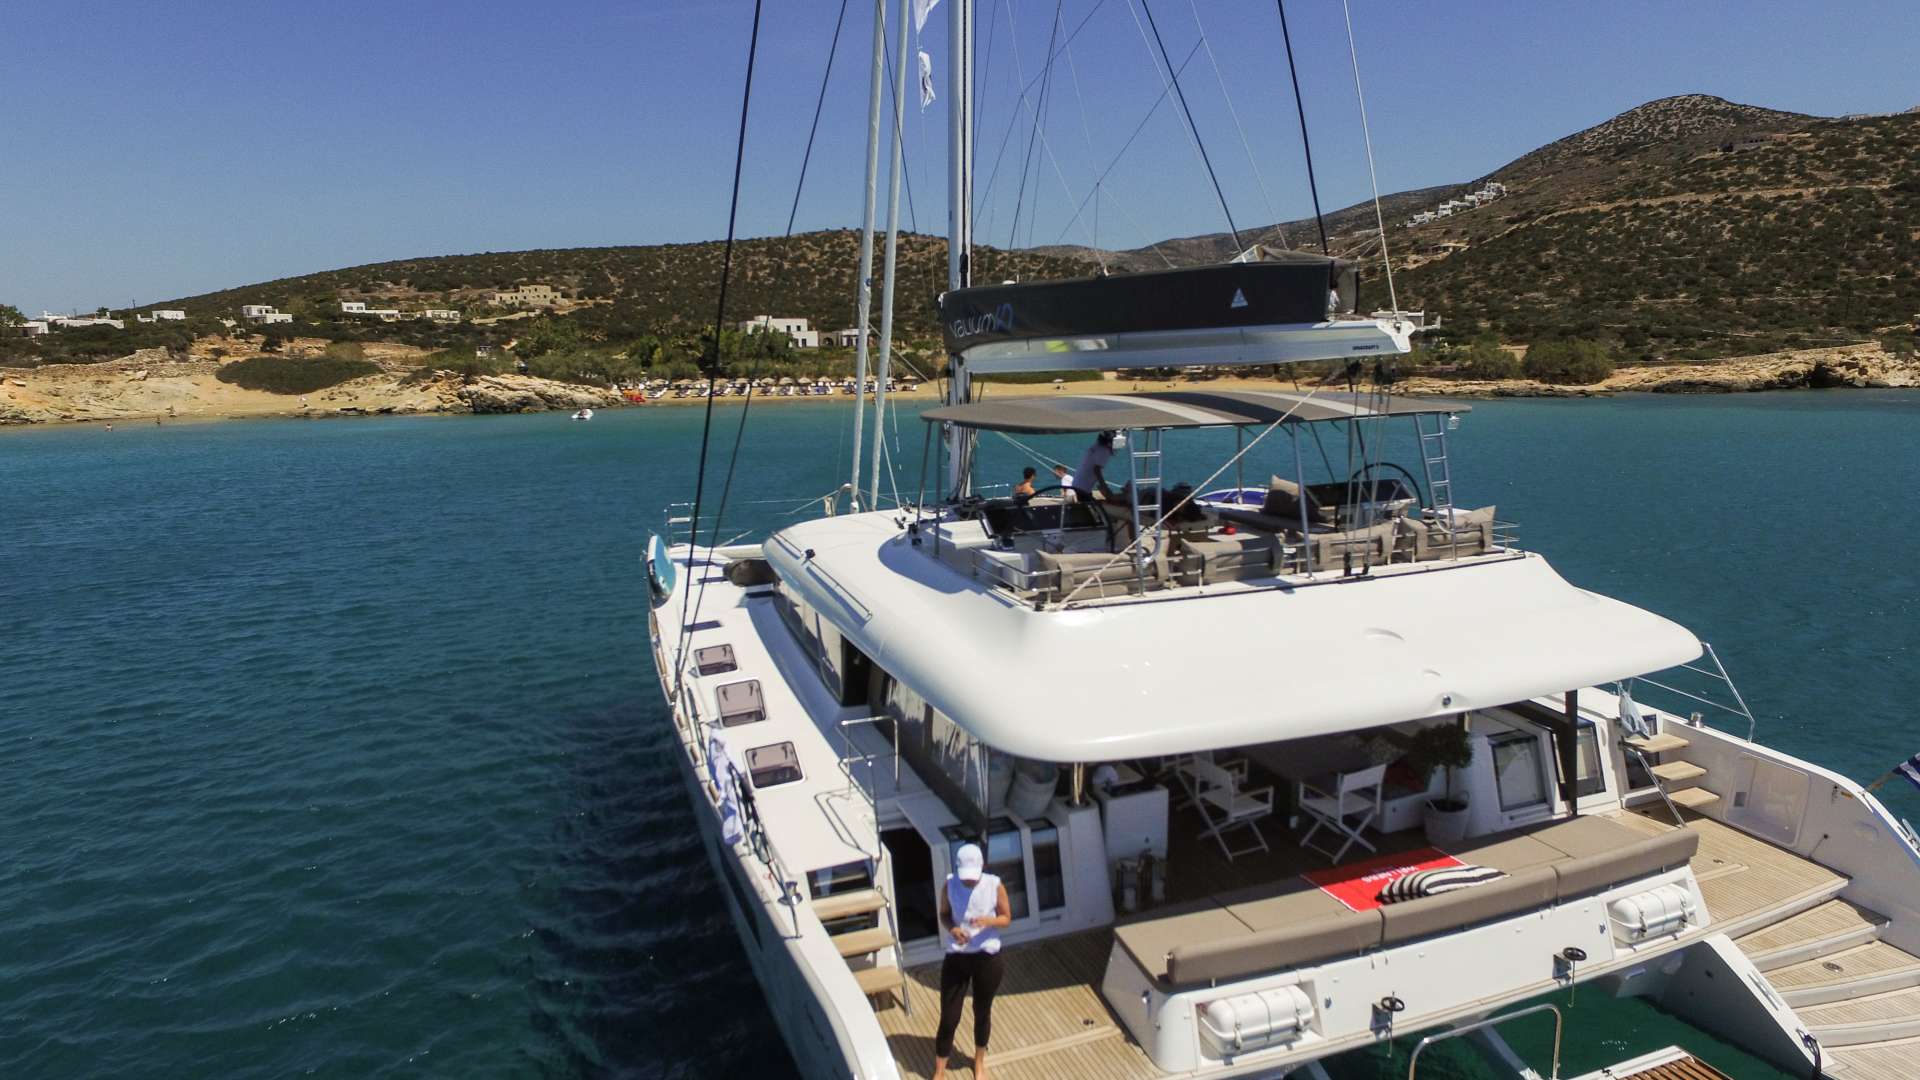 valium62 - Luxury yacht charter worldwide & Boat hire in Greece 1